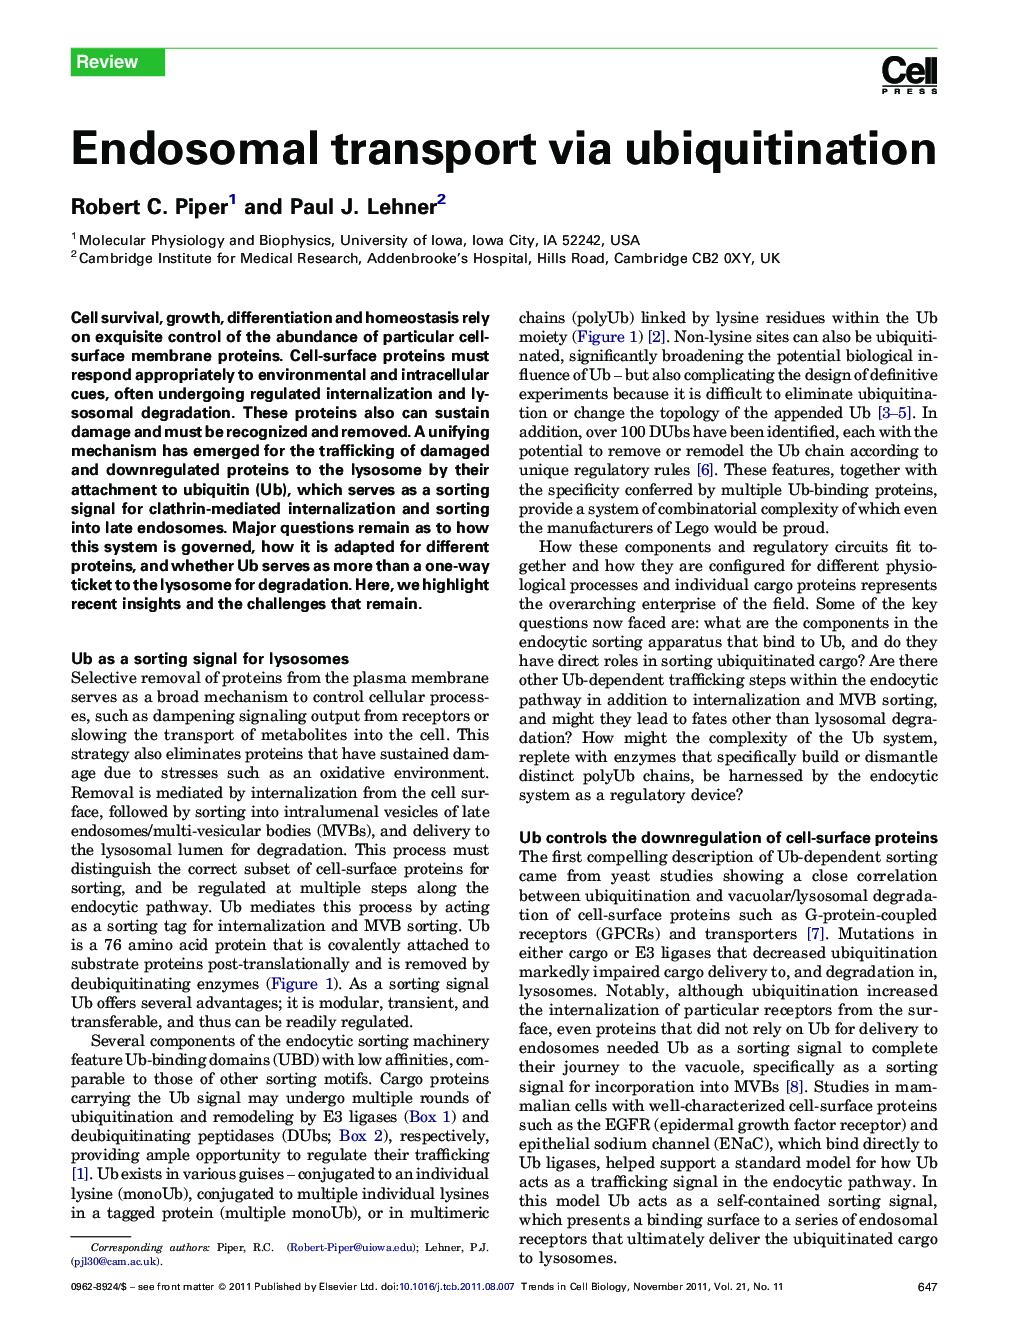 Endosomal transport via ubiquitination